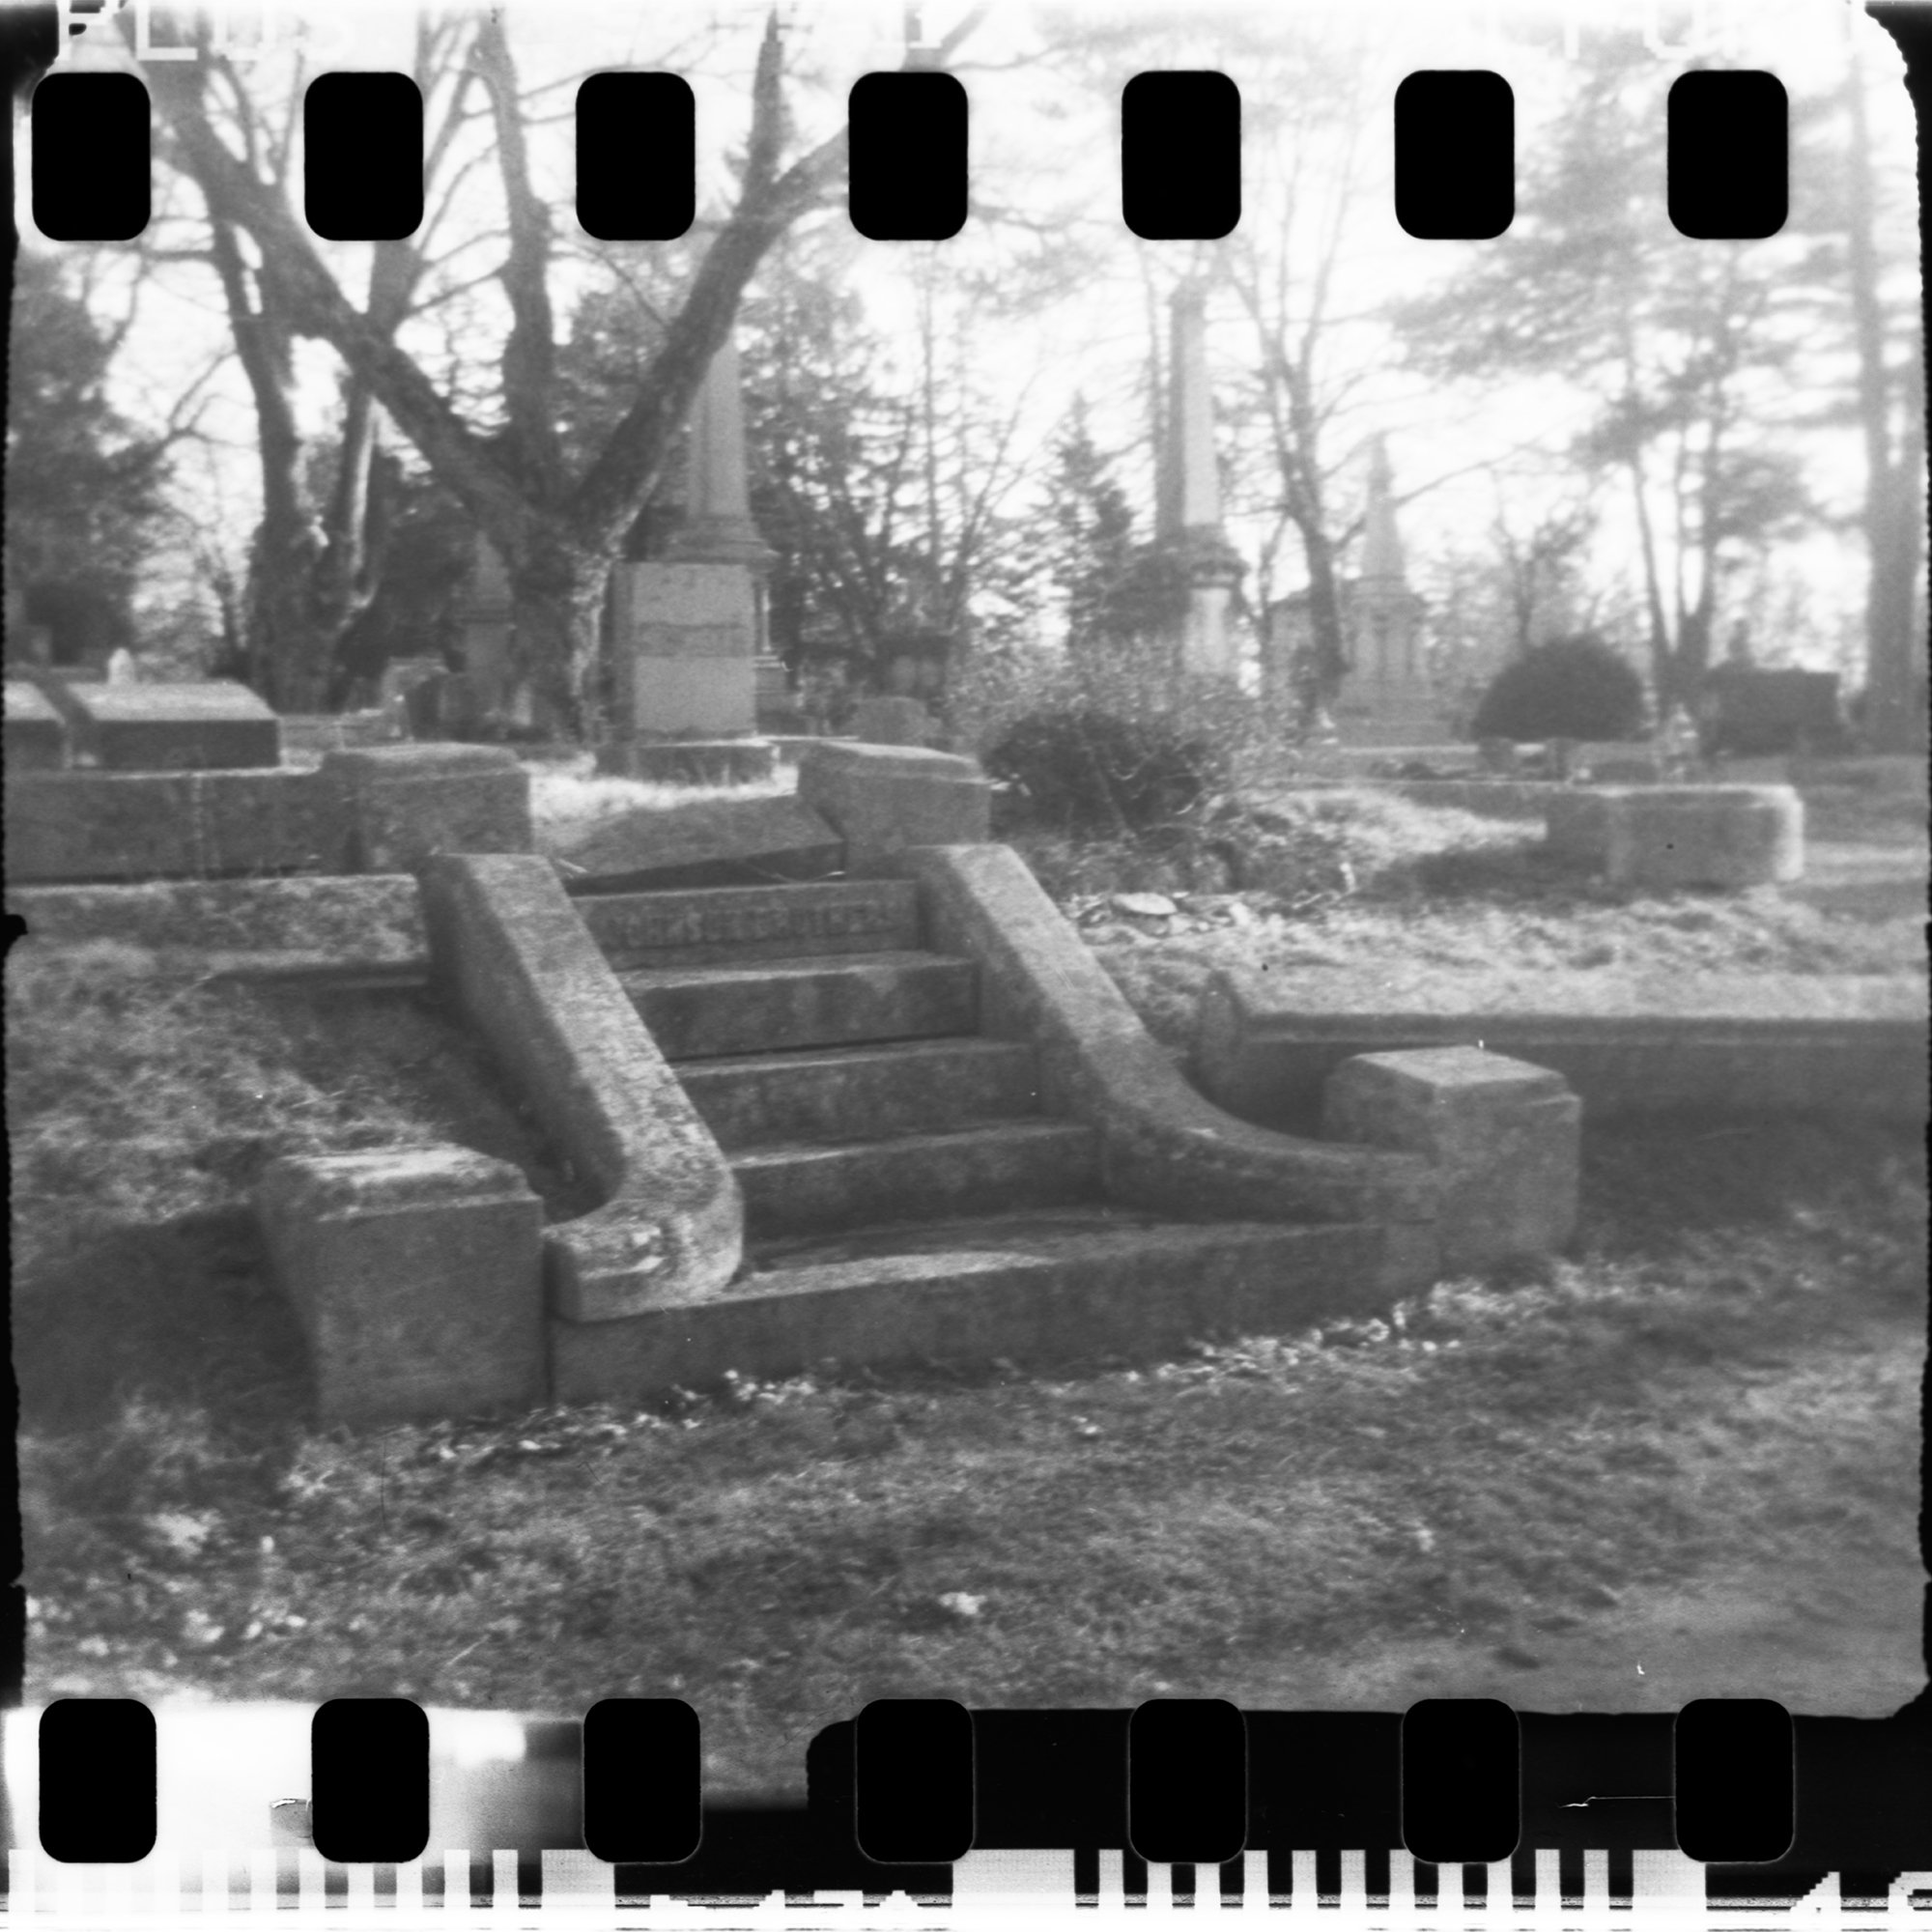 Steps - Evergreen Cemetery